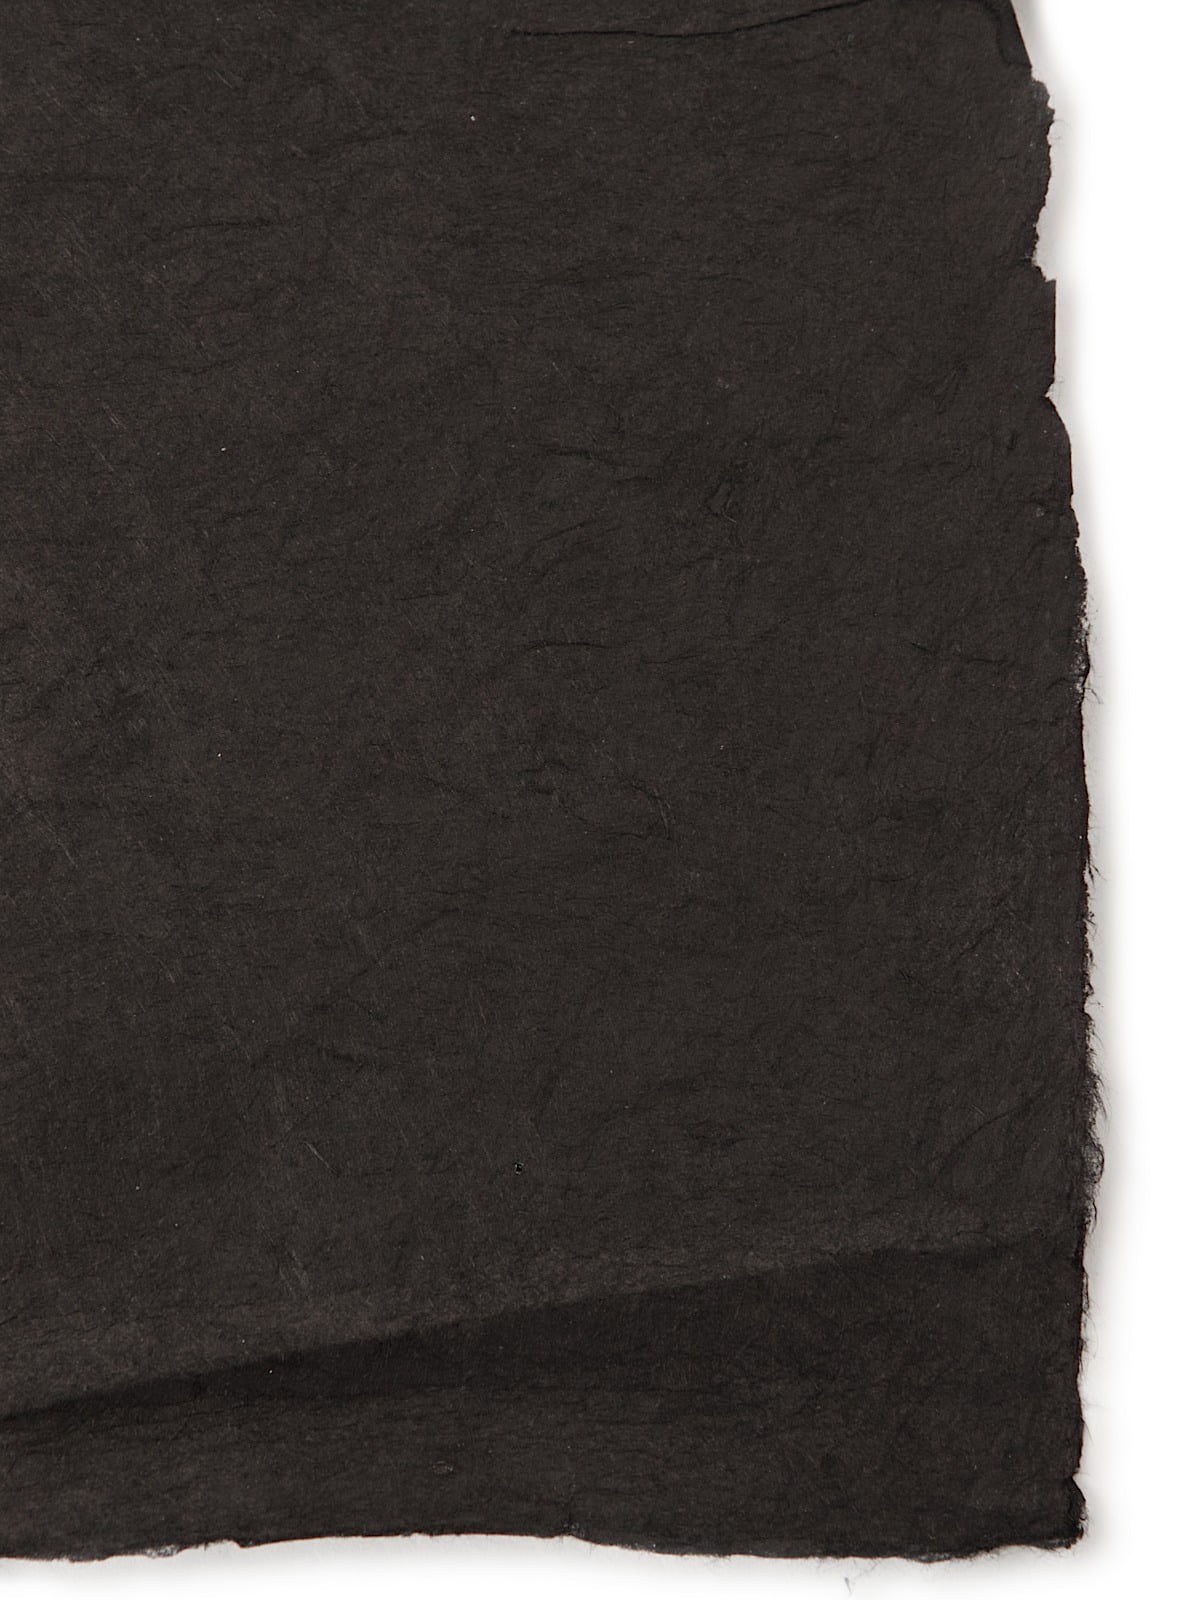 Shizen Black Watercolor Paper - 8 Round, Cold Press/Rough, 5 Sheet Pkg